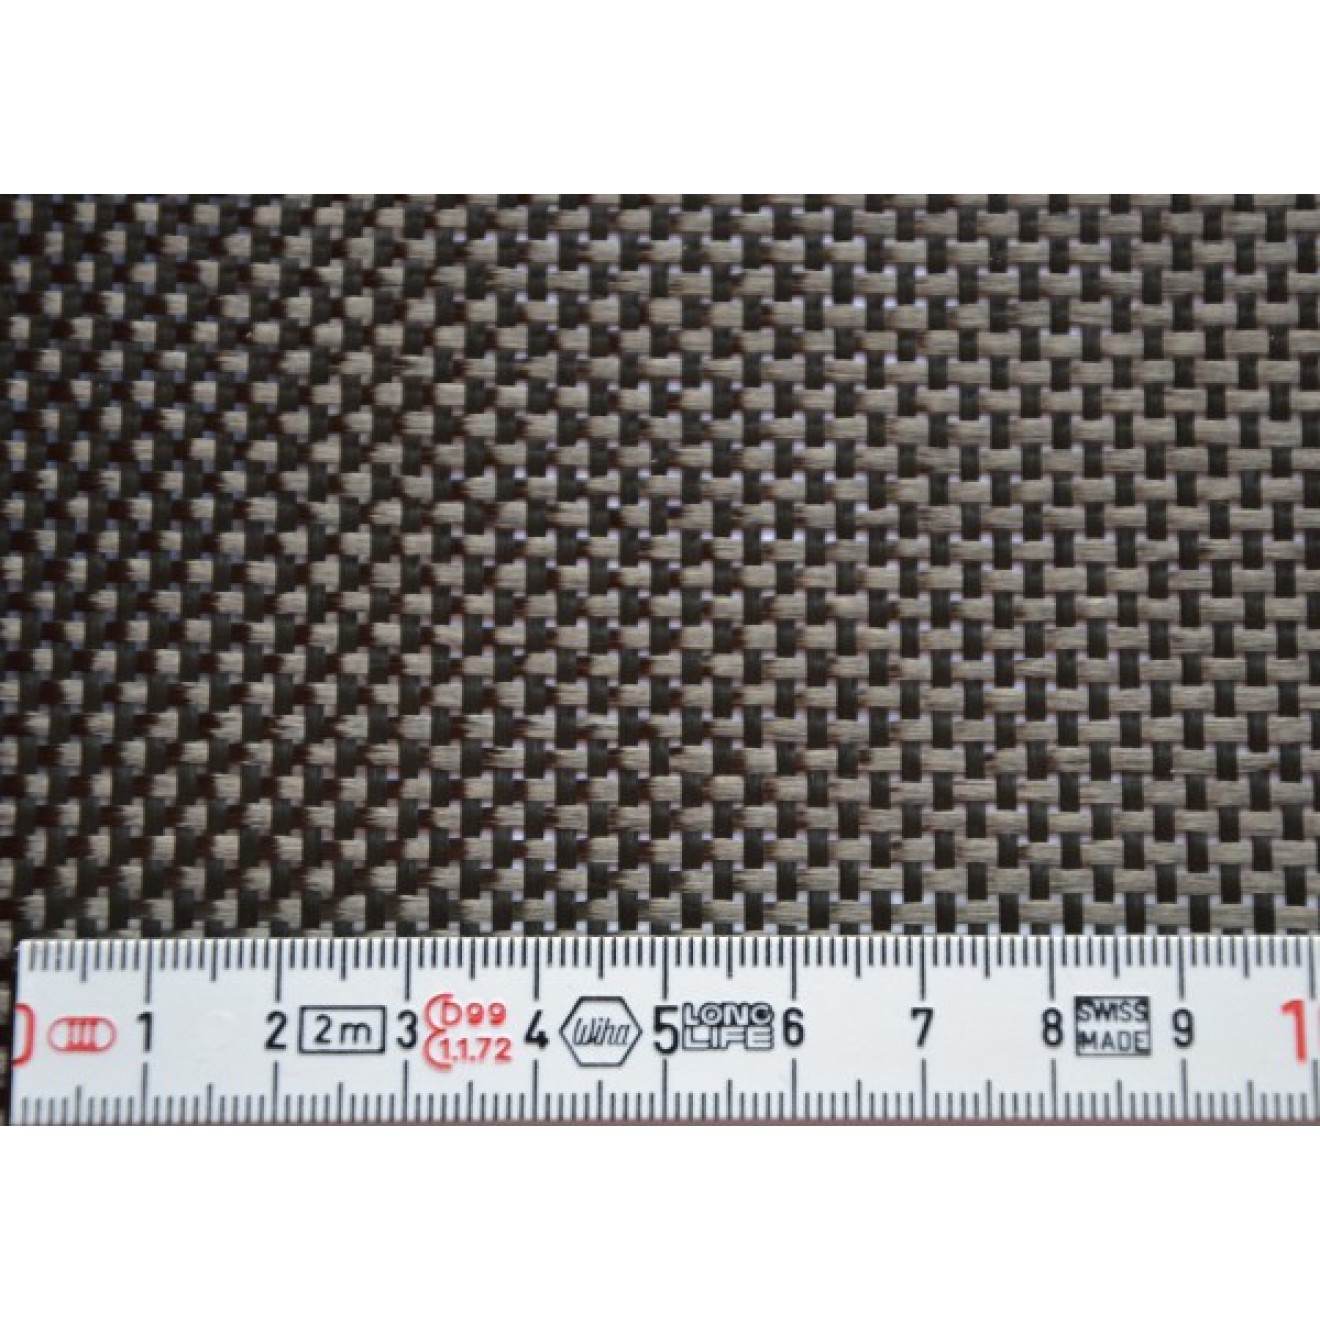 Woven carbon fiber fabric 3K, 160g/m² plain weave Aero